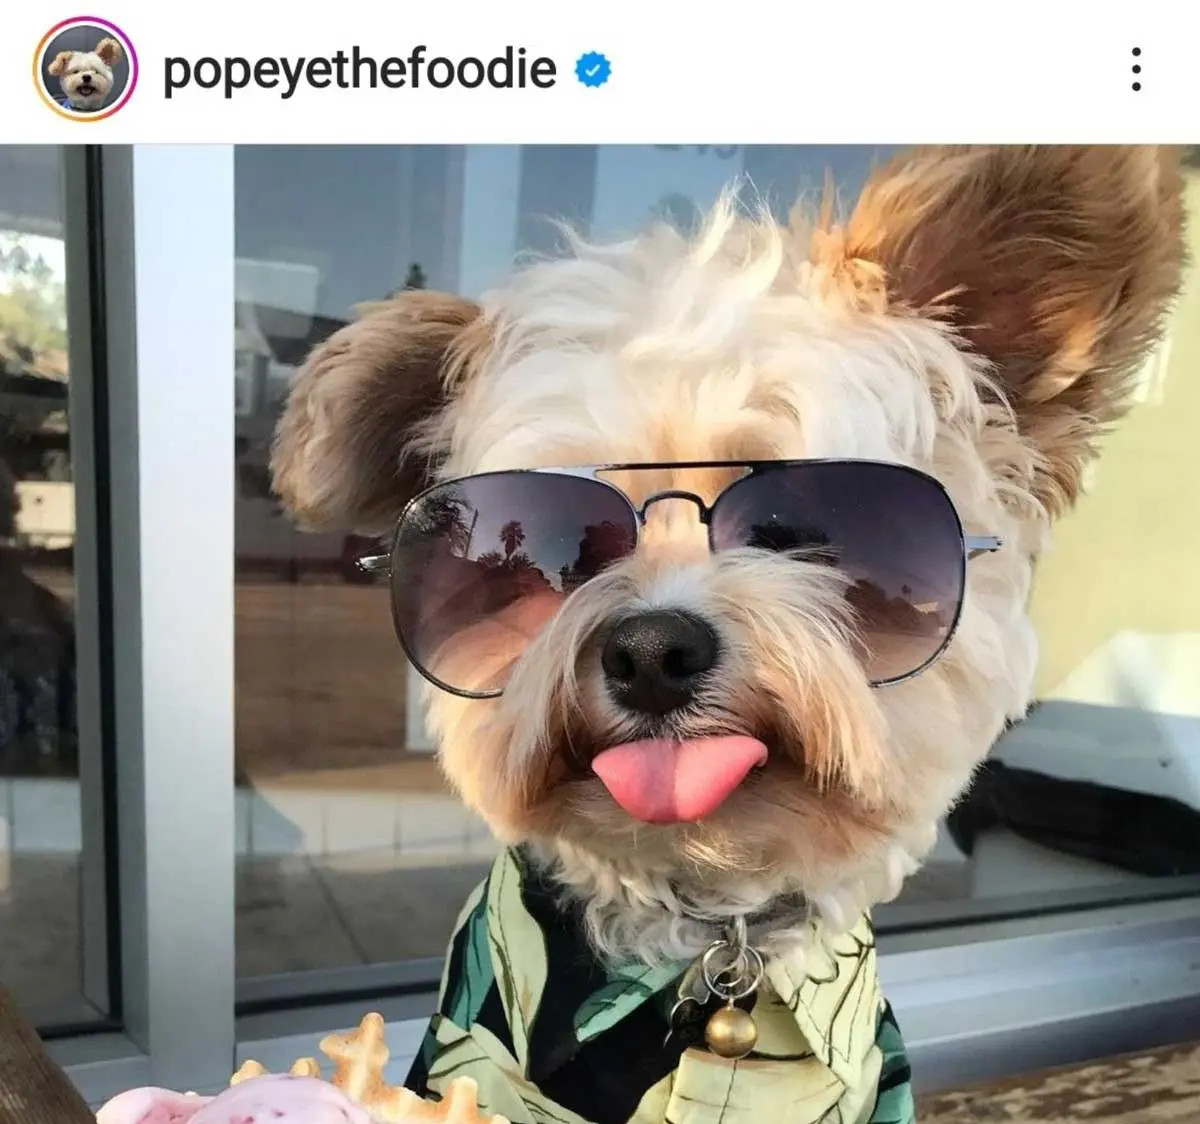 popeye the foodie